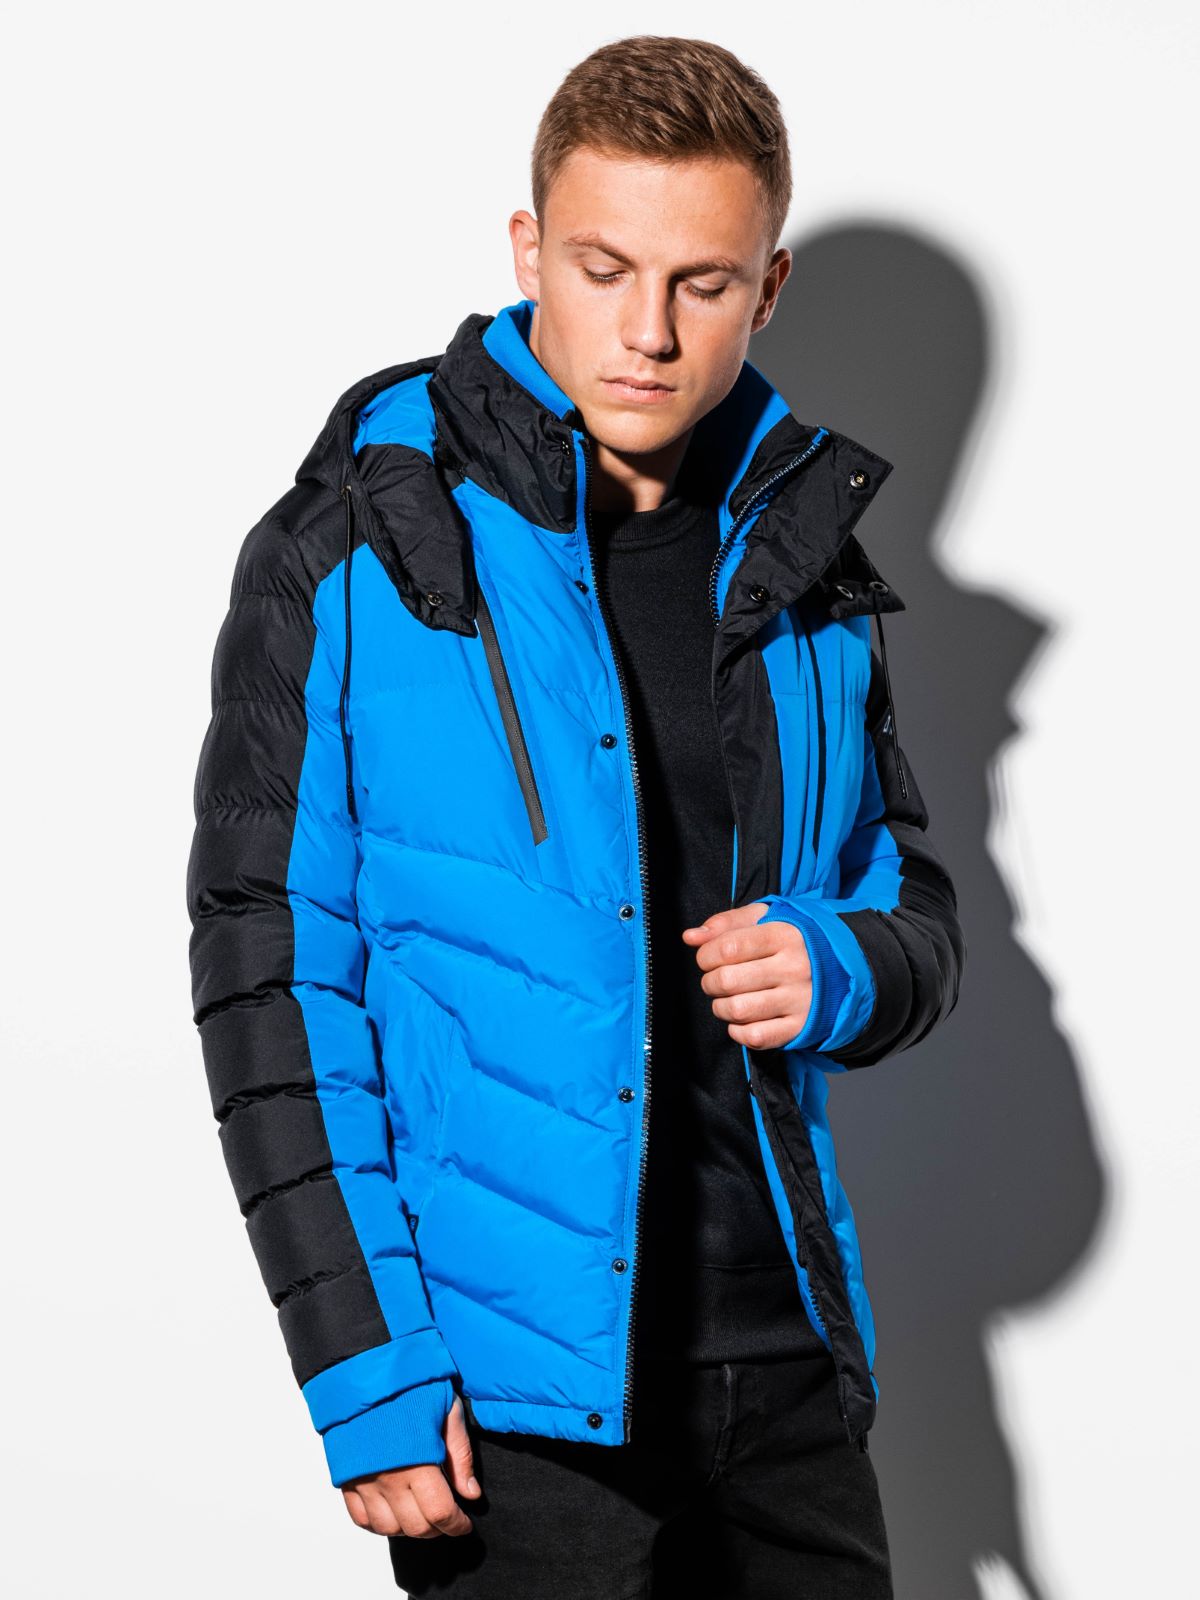 Men's winter jacket C417 - blue | MODONE wholesale - Clothing For Men